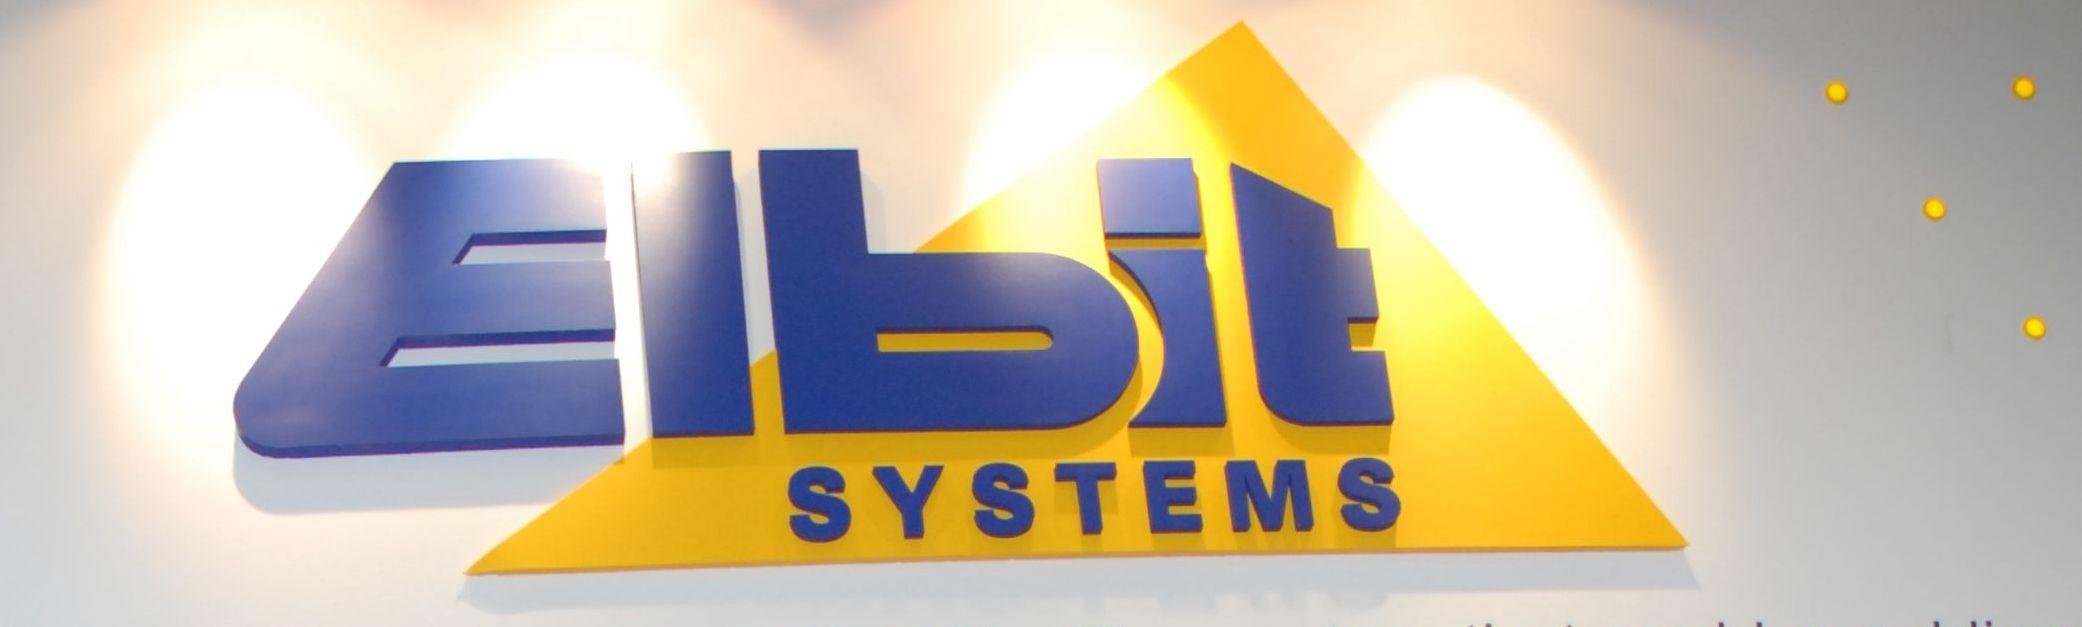 Elbit Logo - Elbit Systems - Israel